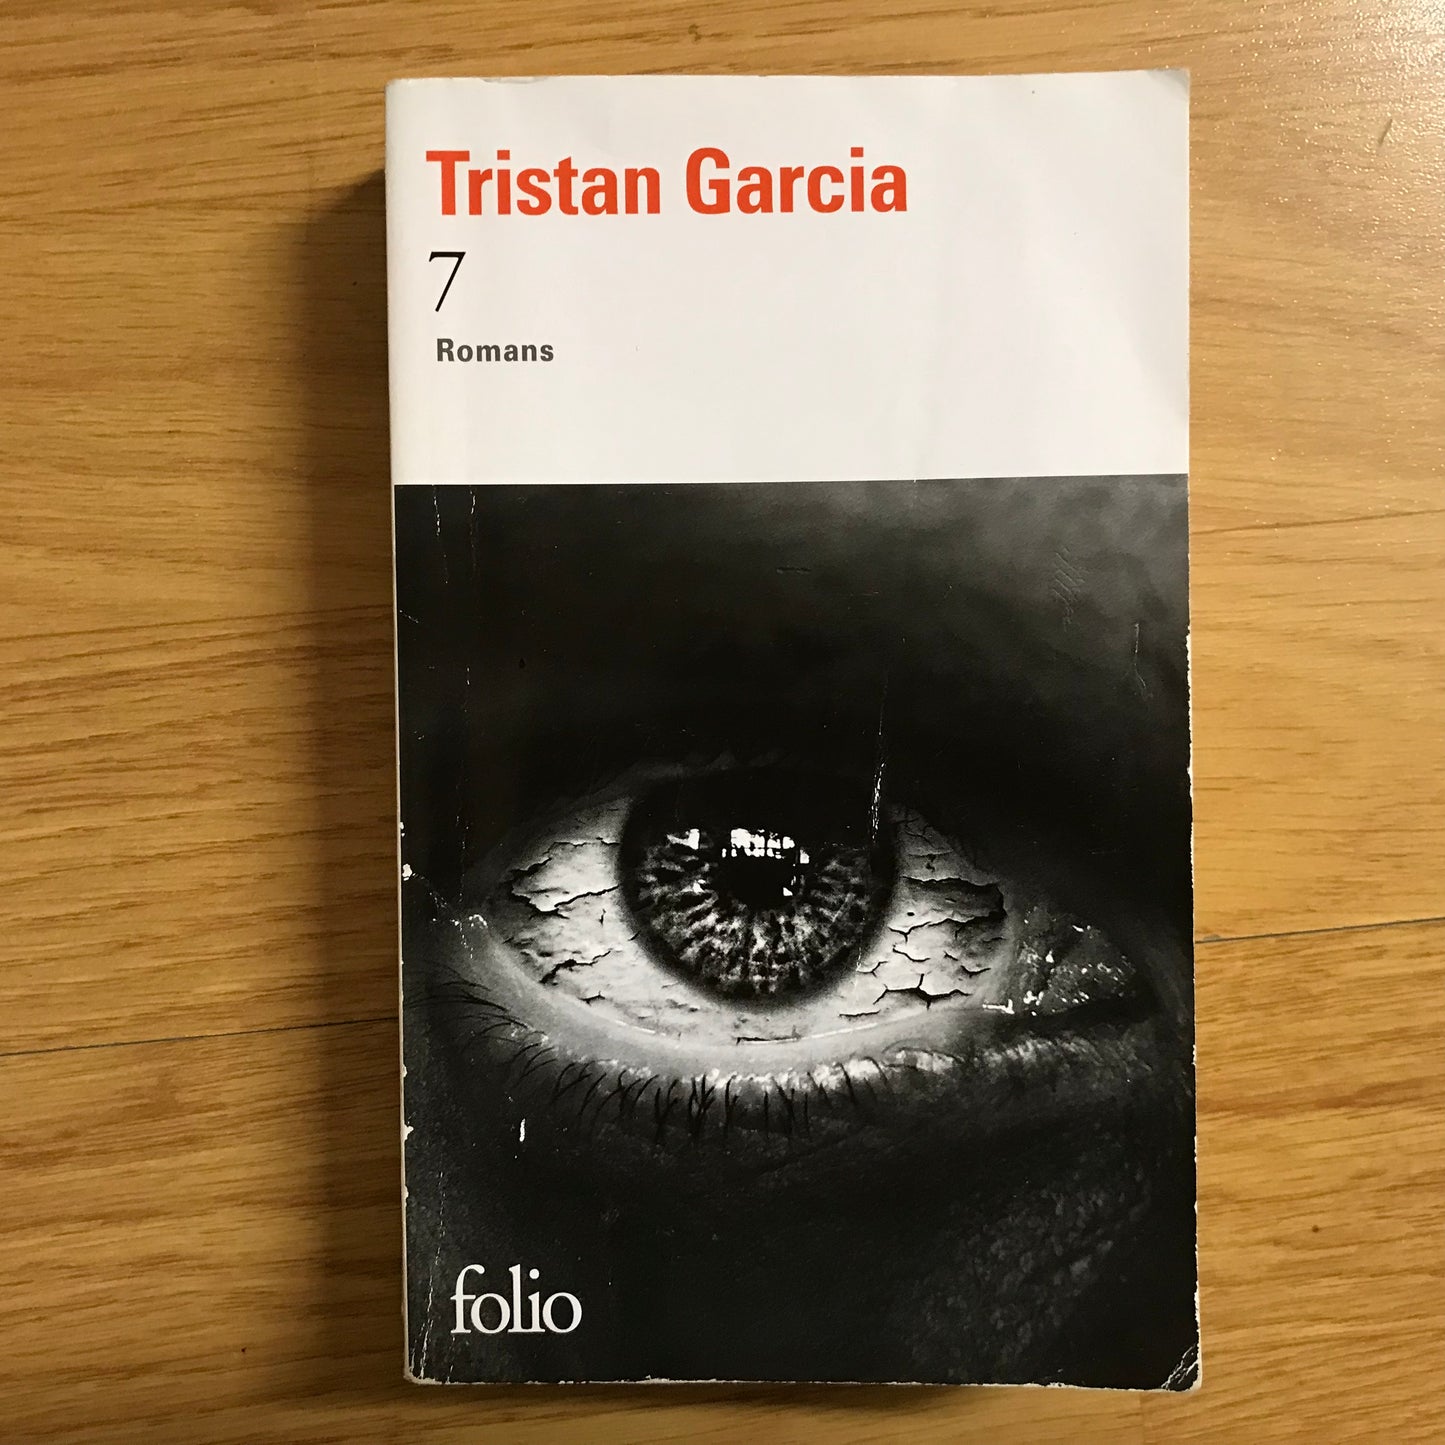 Garcia, Tristan - 7